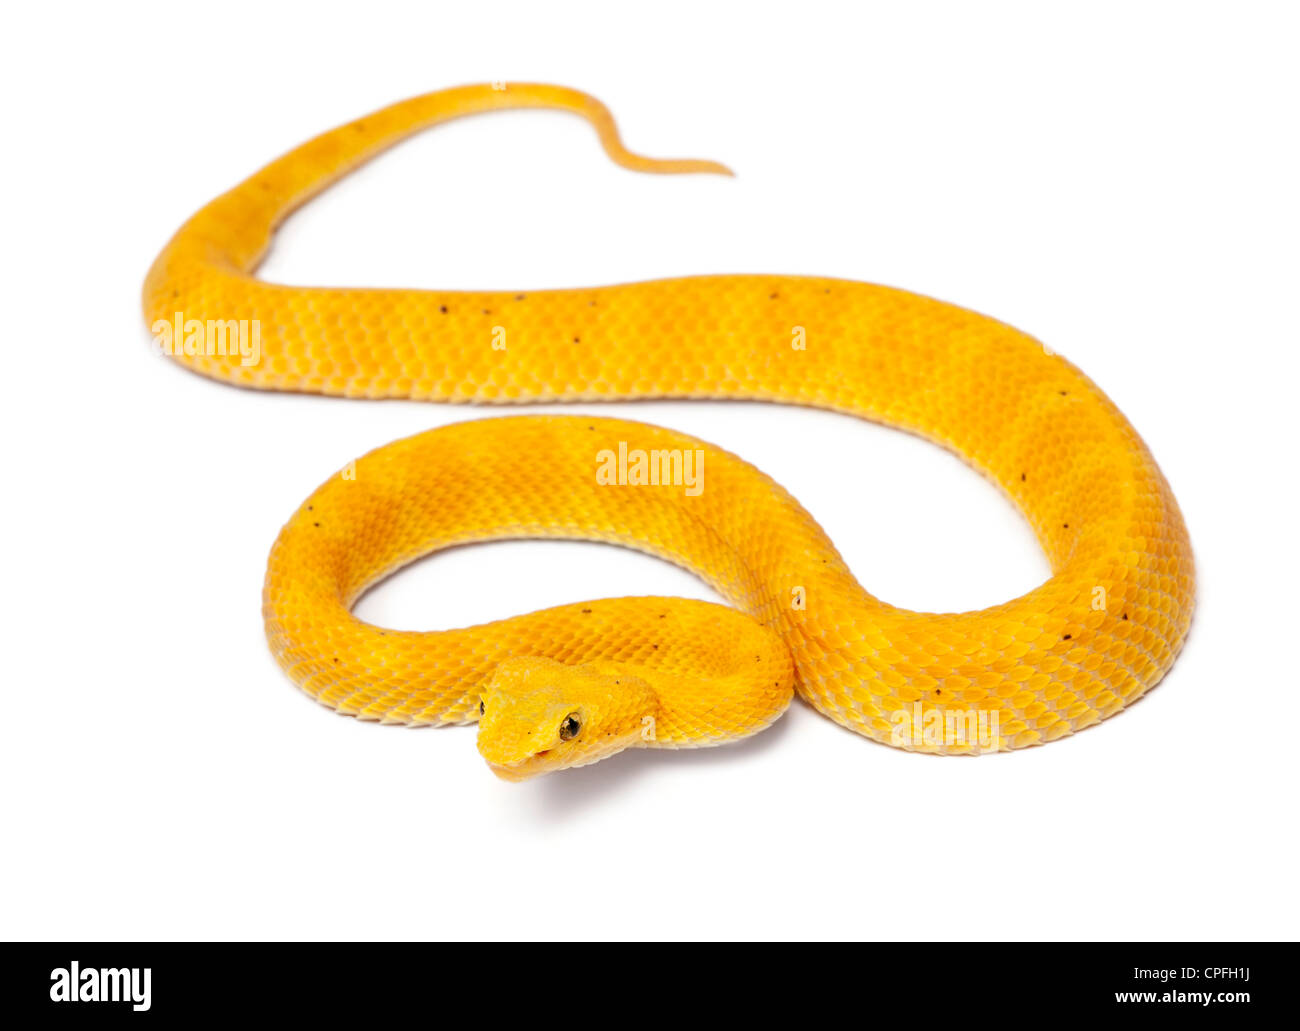 Yellow Eyelash Viper, Bothriechis schlegelii, against white background Stock Photo